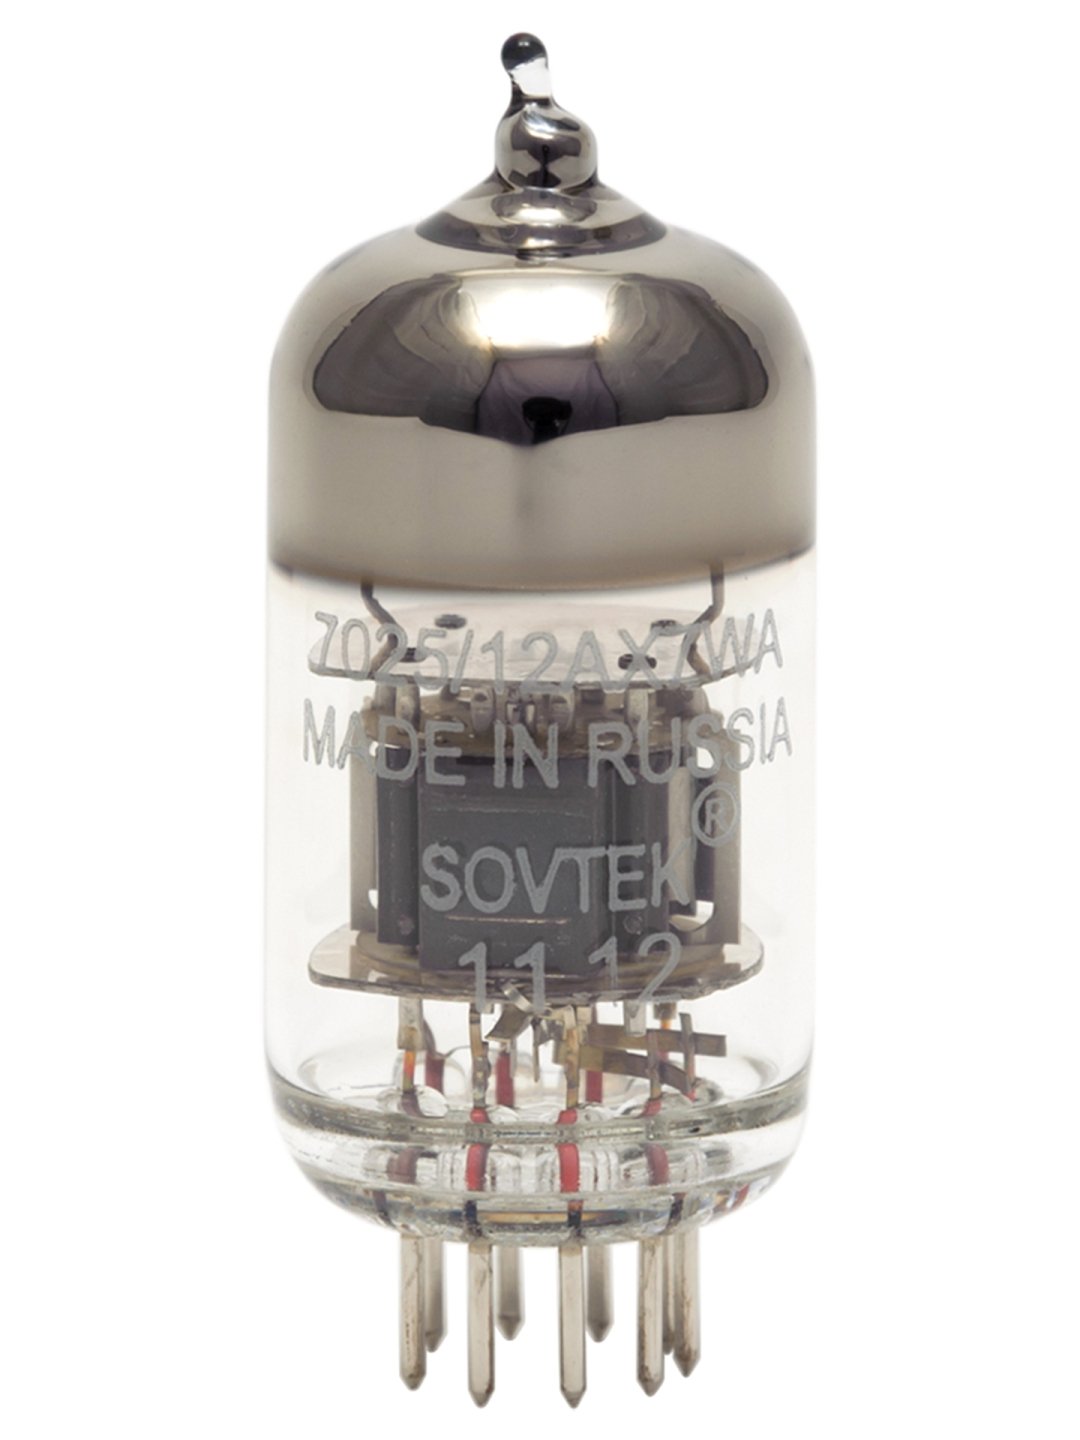 SOVTEK 7025/12AX7WA - テクソル オンラインショップ | 高品質真空管 （オーディオ用・ギター用）通販・通信販売専門店